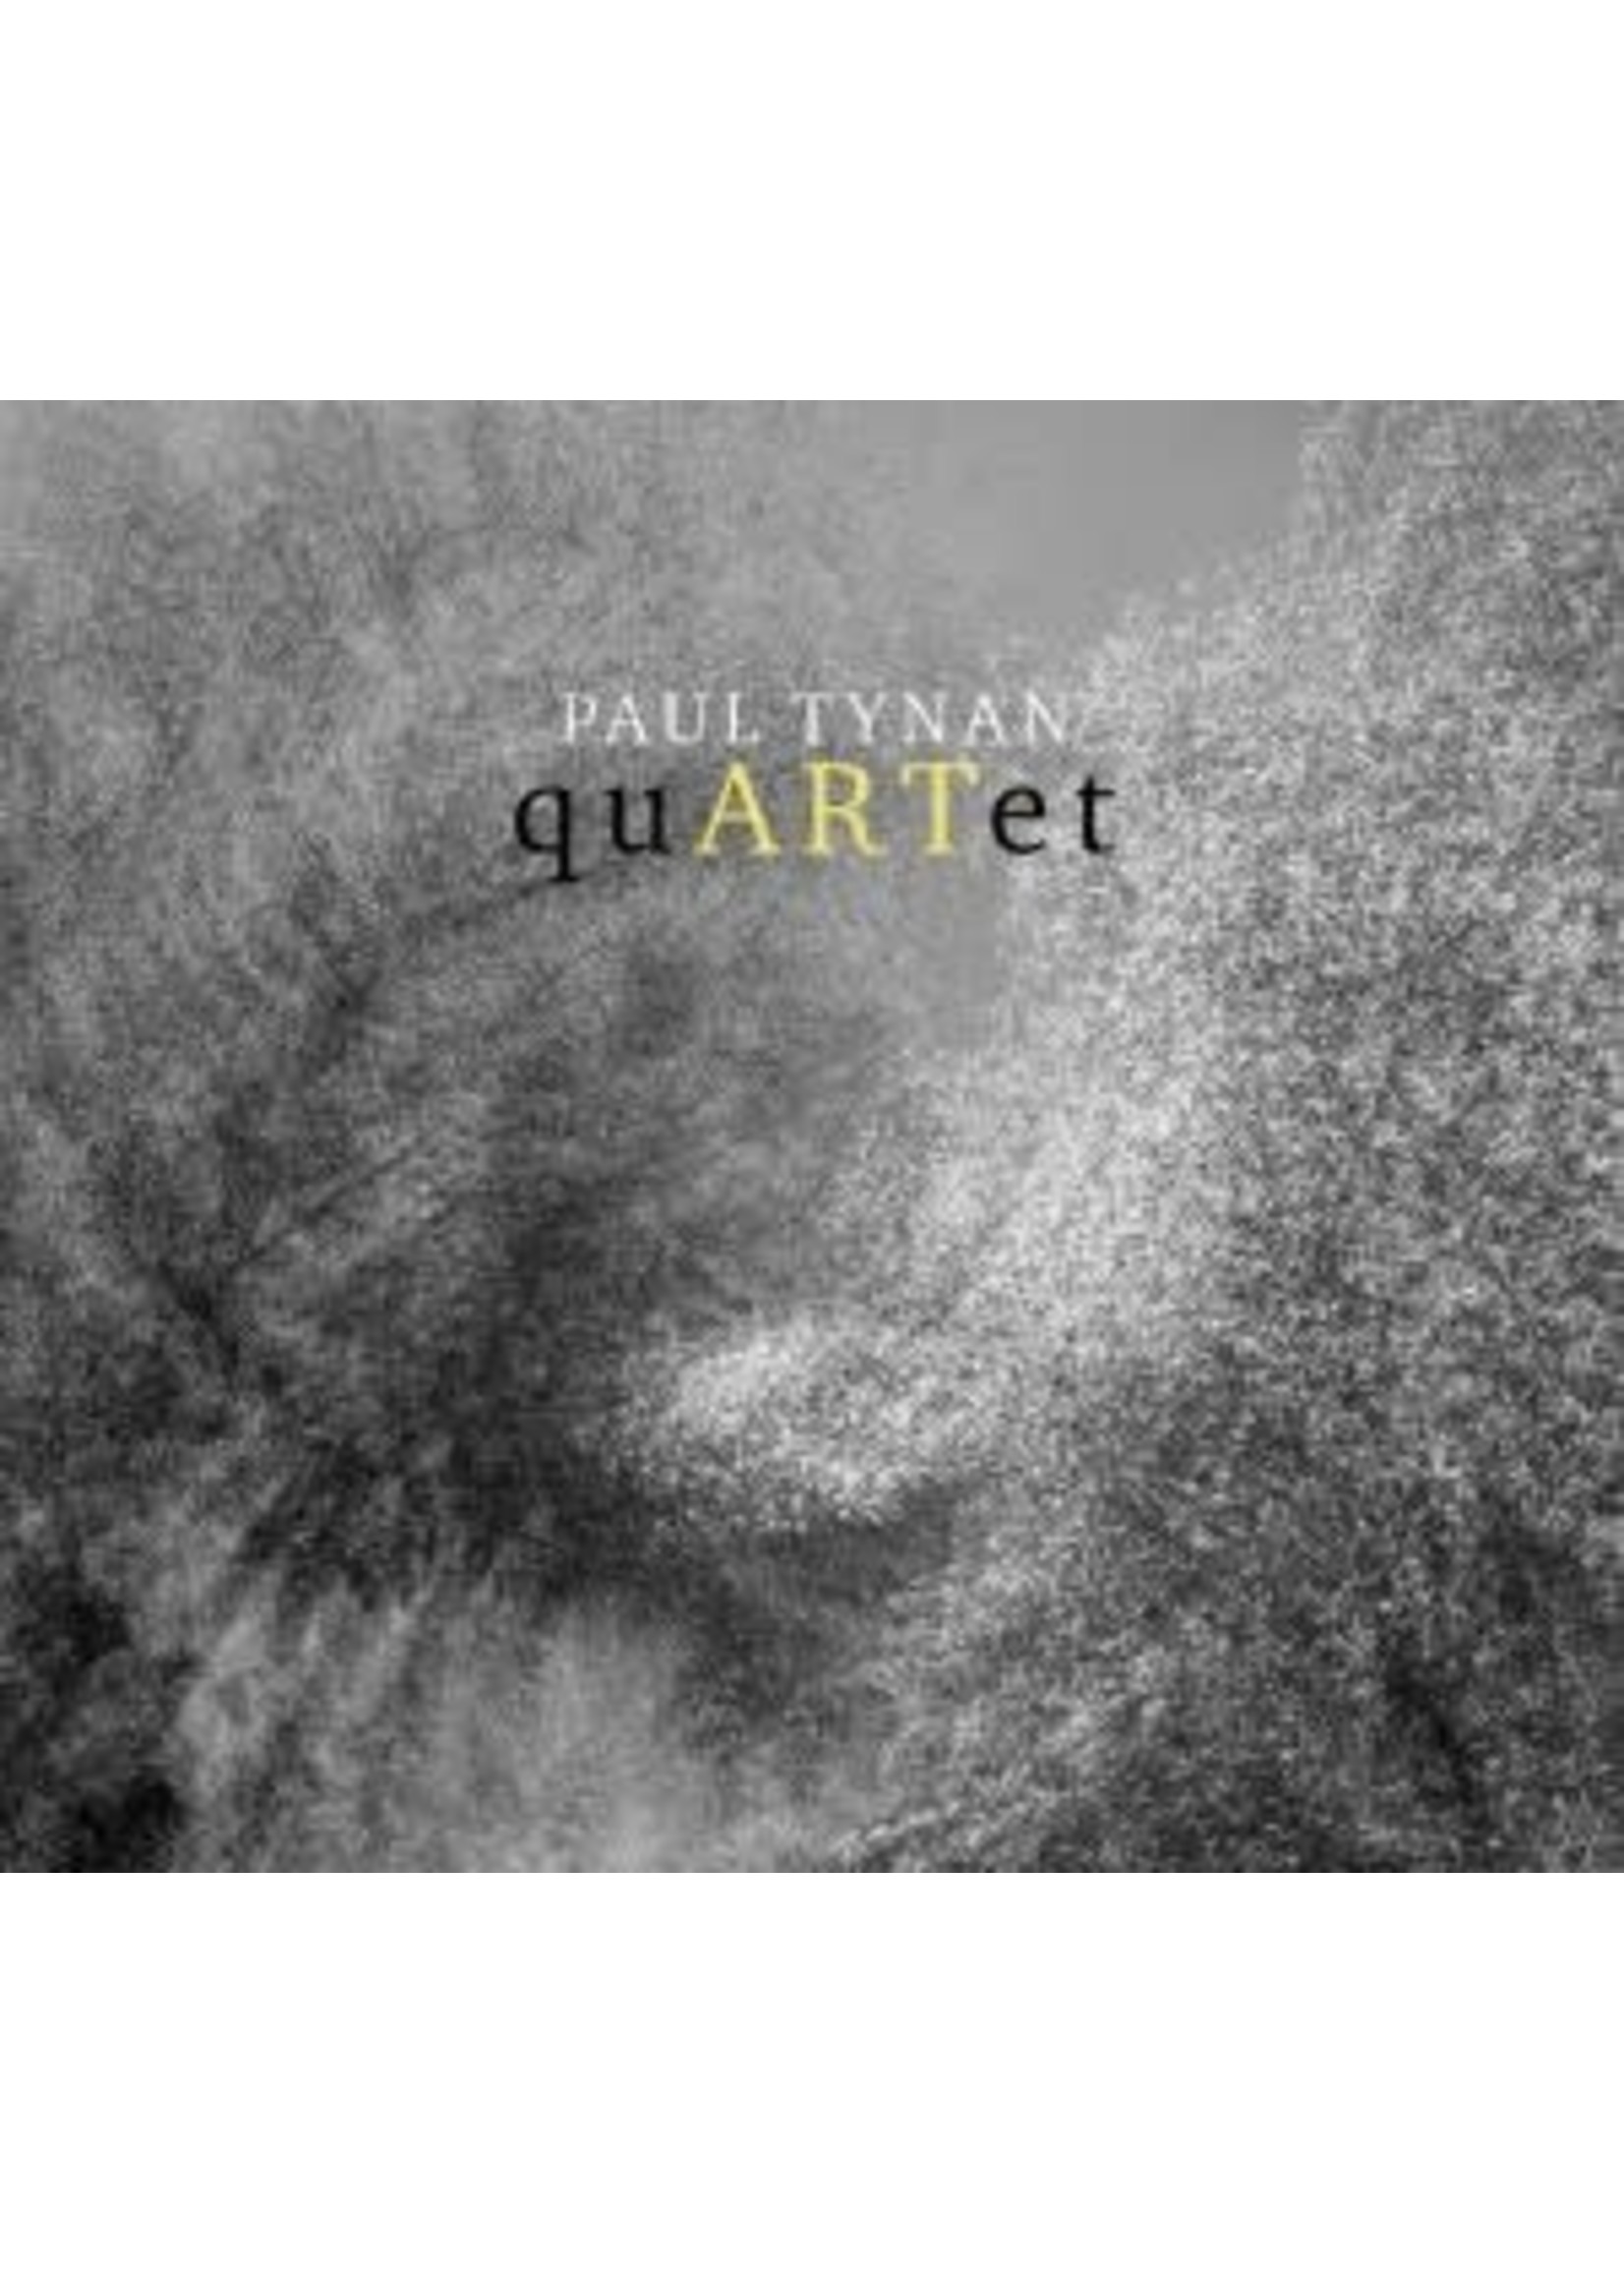 QuARTet by Paul Tynan